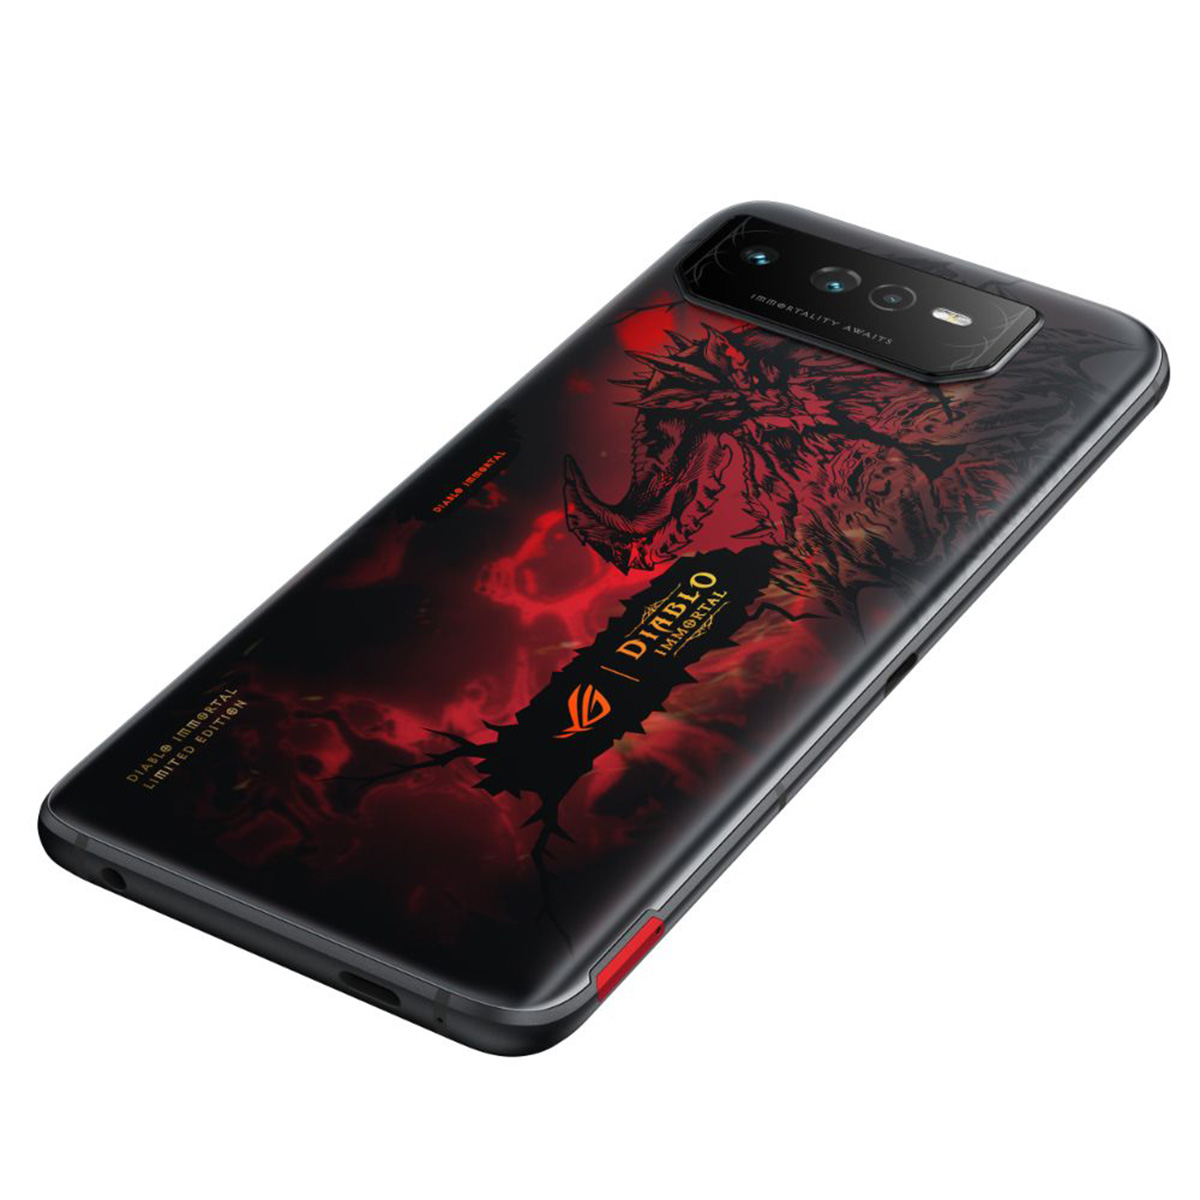 ROG Phone 6 Diablo Immortal Edition (AI2201)